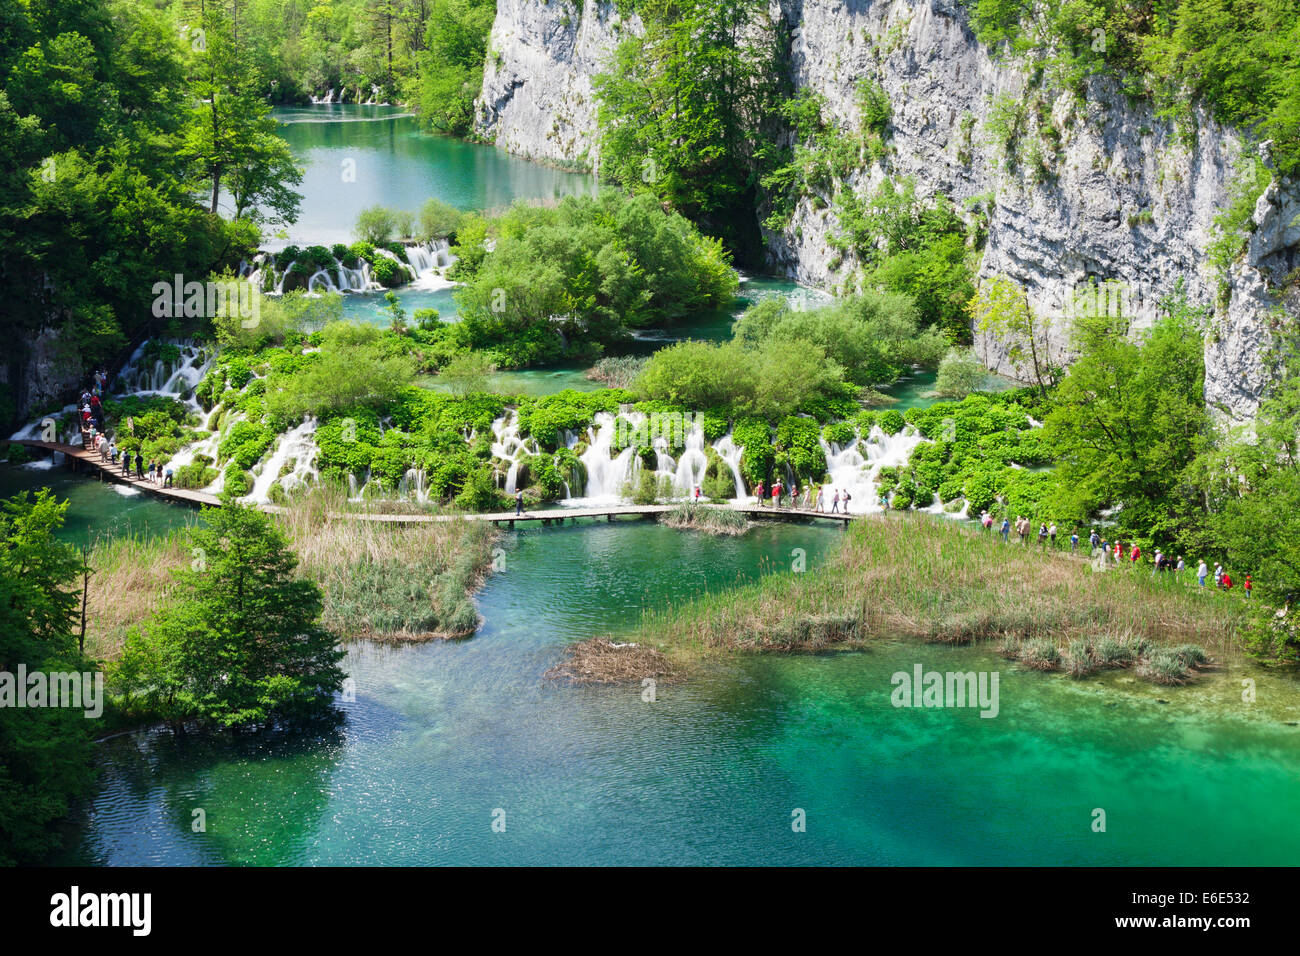 The lower lakes, Gavanovac Lake and Milanovac Lake, Plitvice Lakes National Park, UNESCO World Heritage Site, Croatia Stock Photo